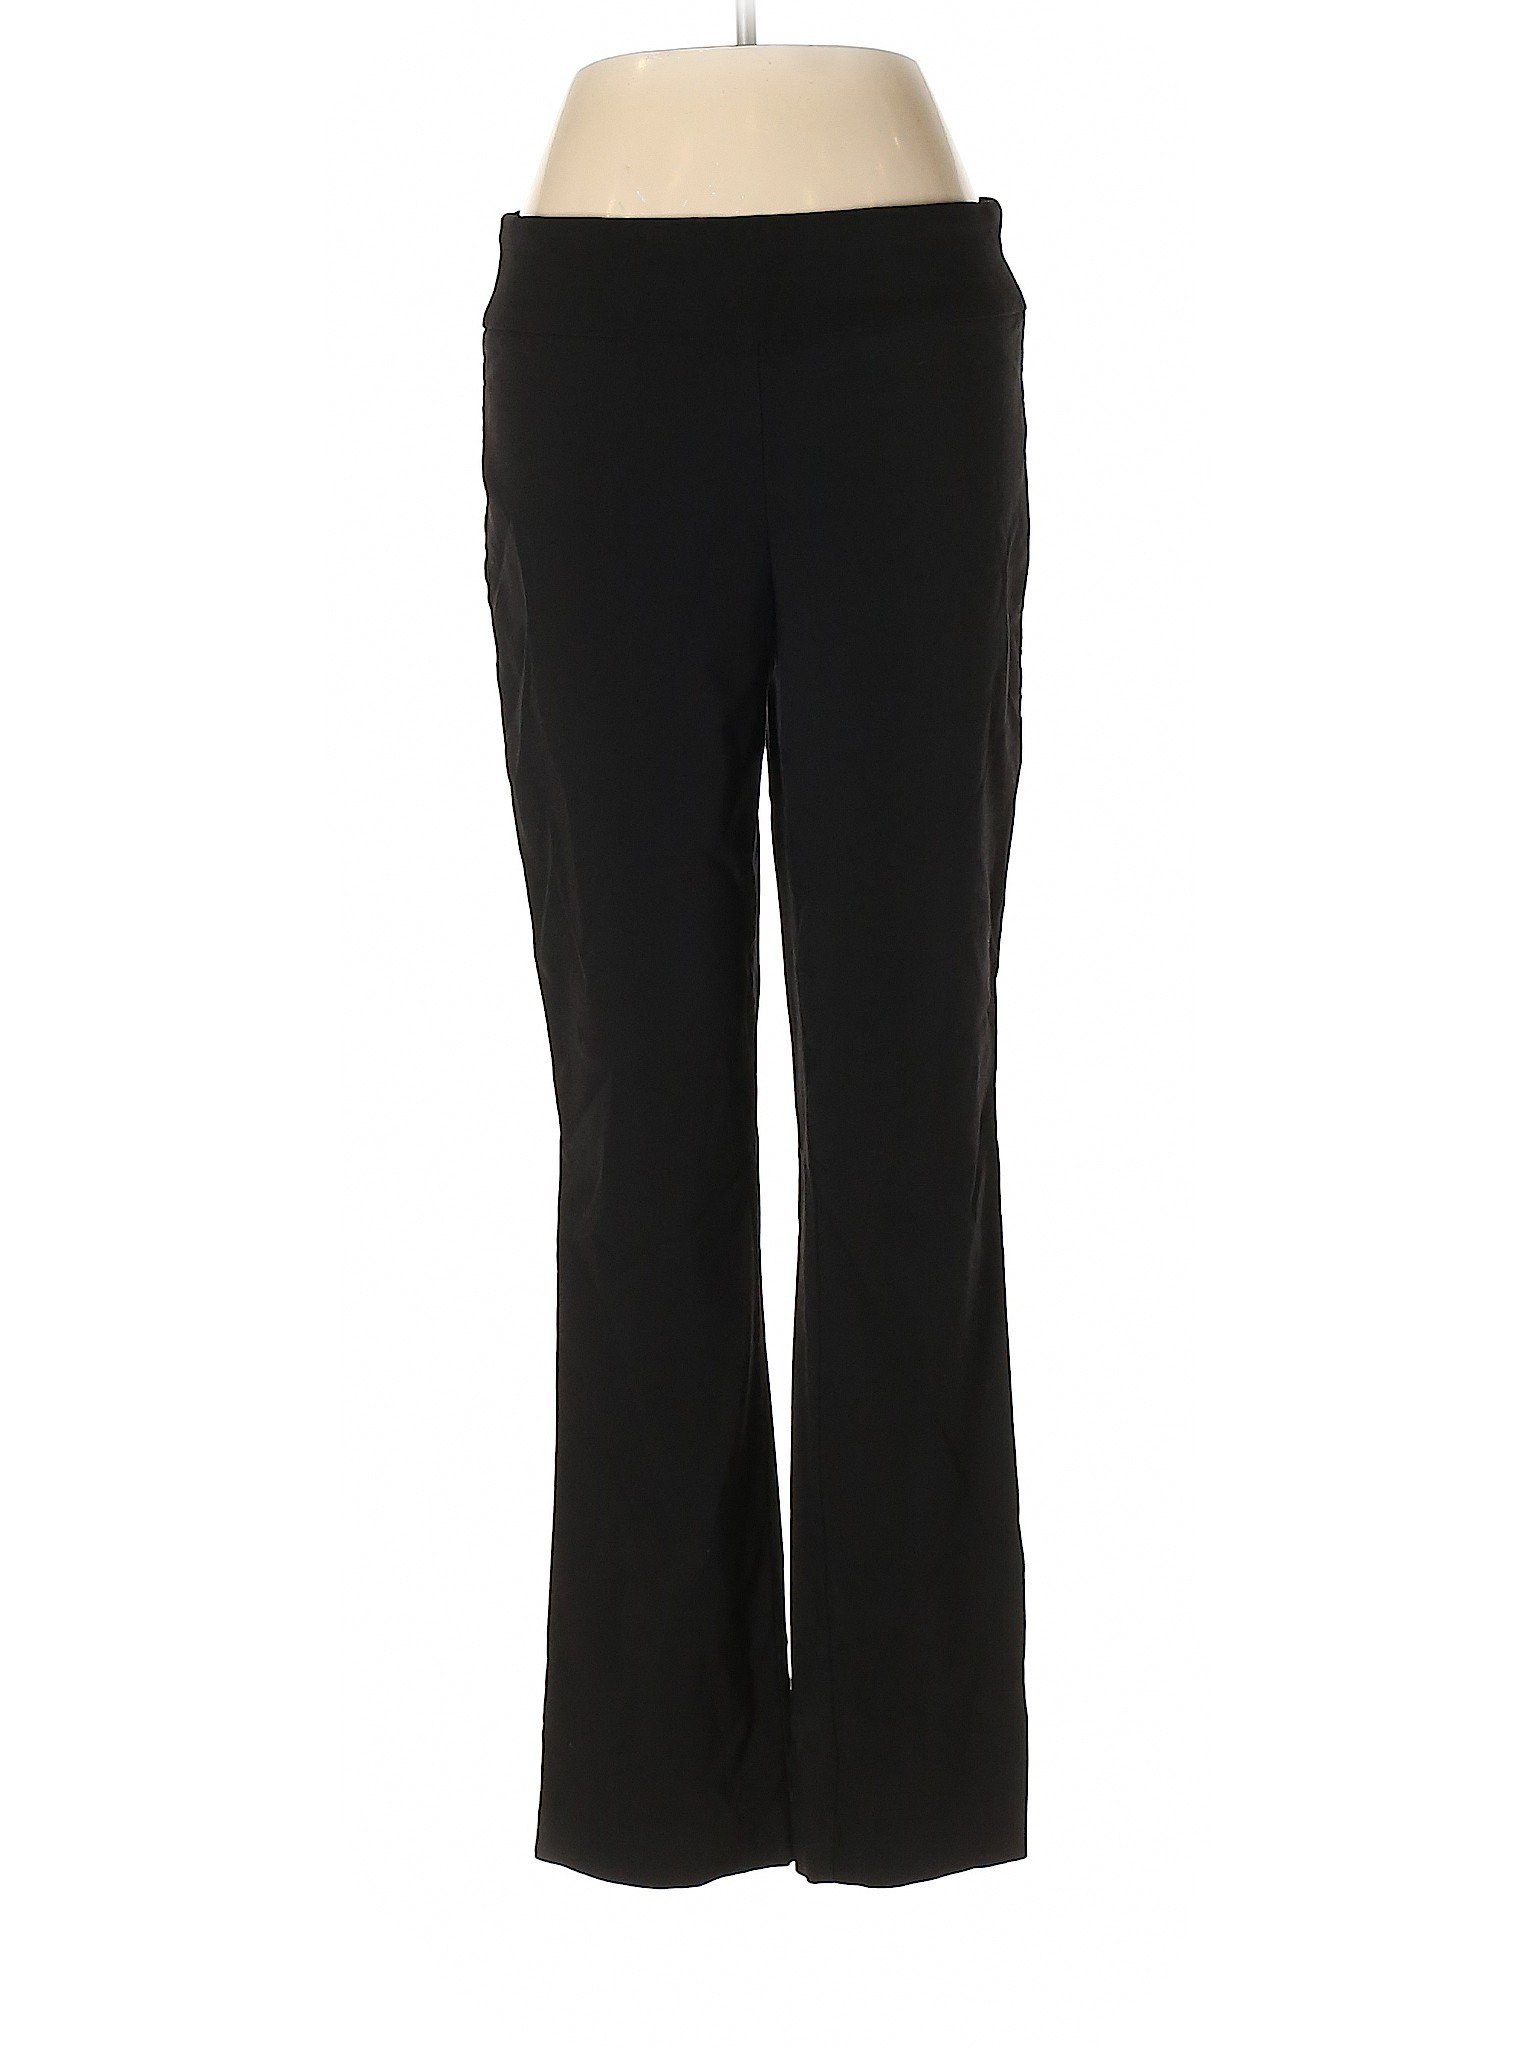 Hilary Radley Women Black Casual Pants 8 | eBay